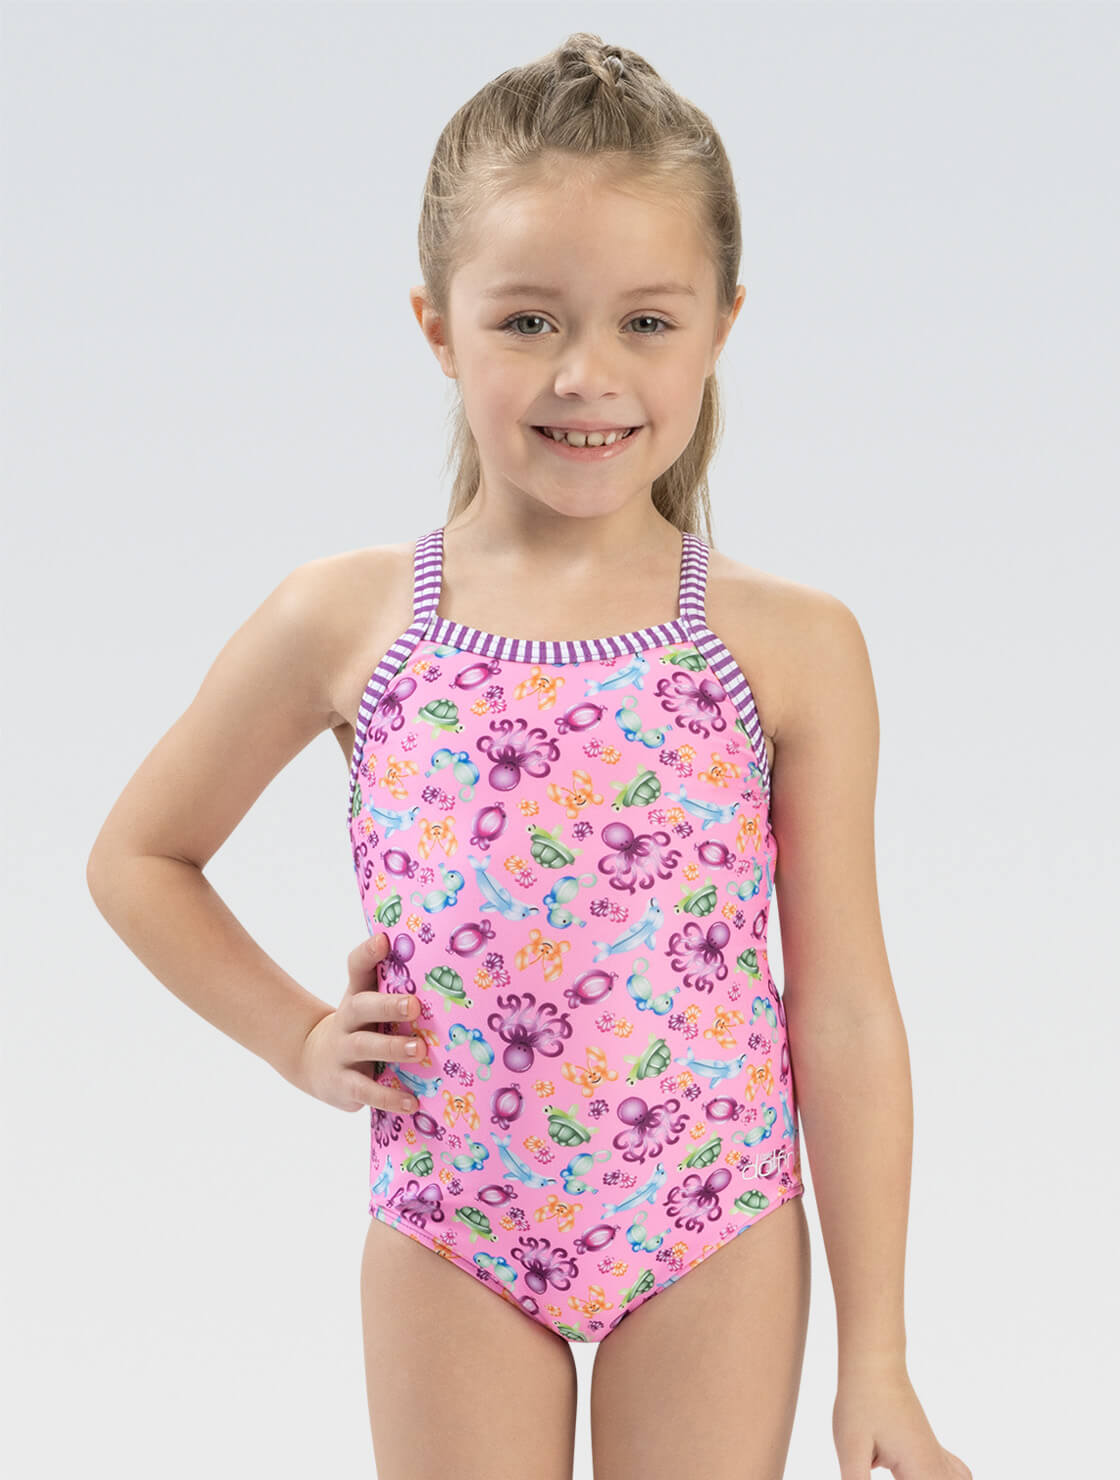 https://cdn.shopify.com/s/files/1/2415/7579/files/9810-c27-purple-little-dolfin-girls-one-piece-swimsuit-animaloons-front.jpg?v=1706263653